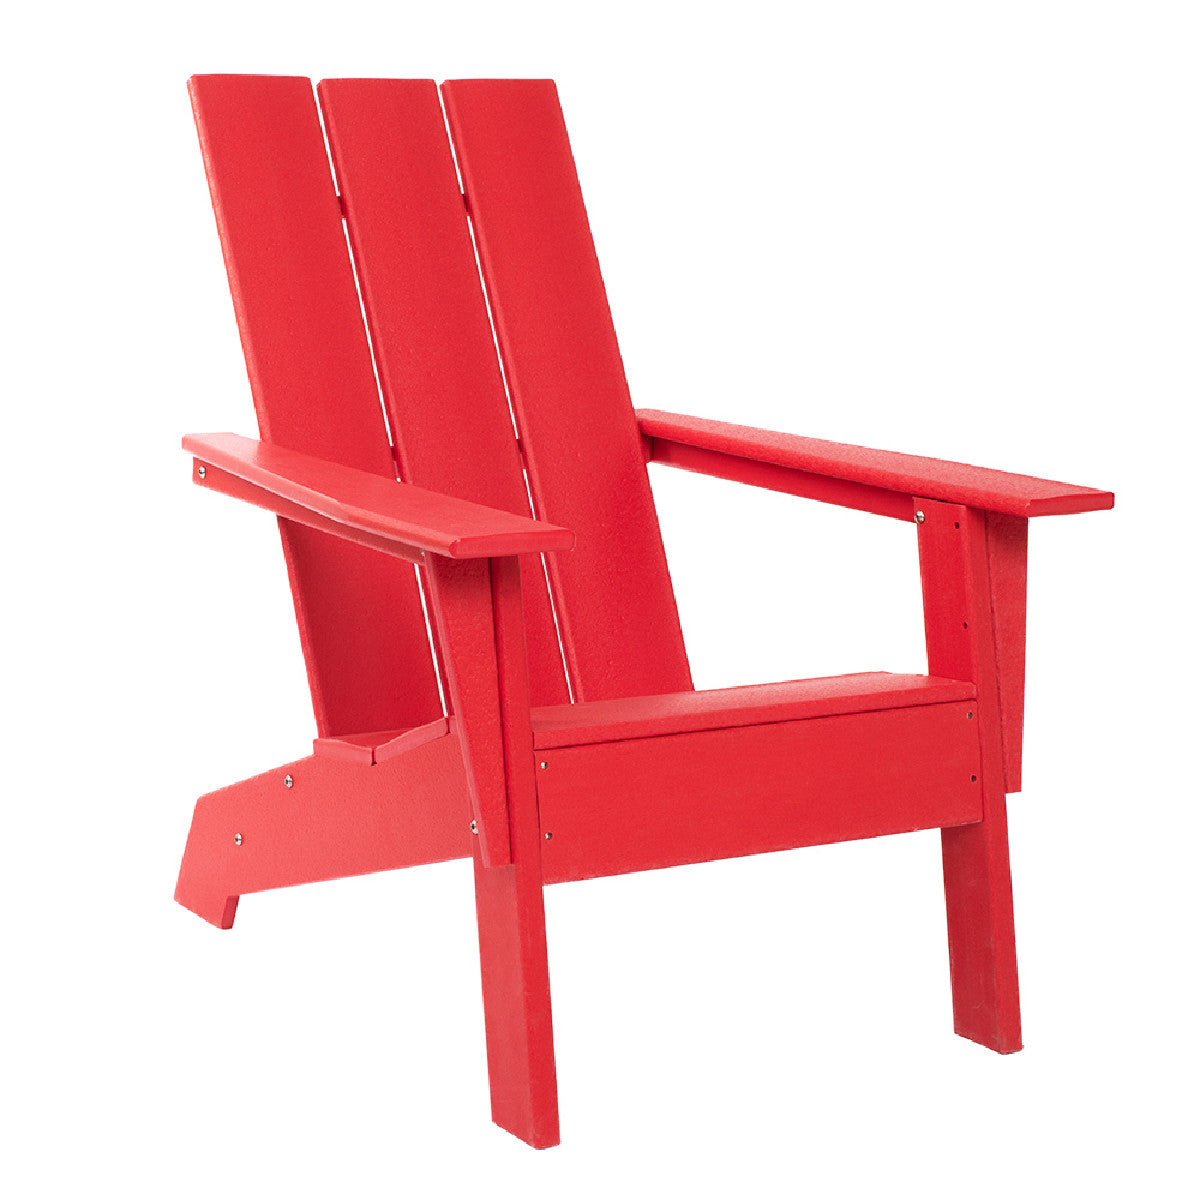 31" Red Heavy Duty Plastic Adirondack Chair